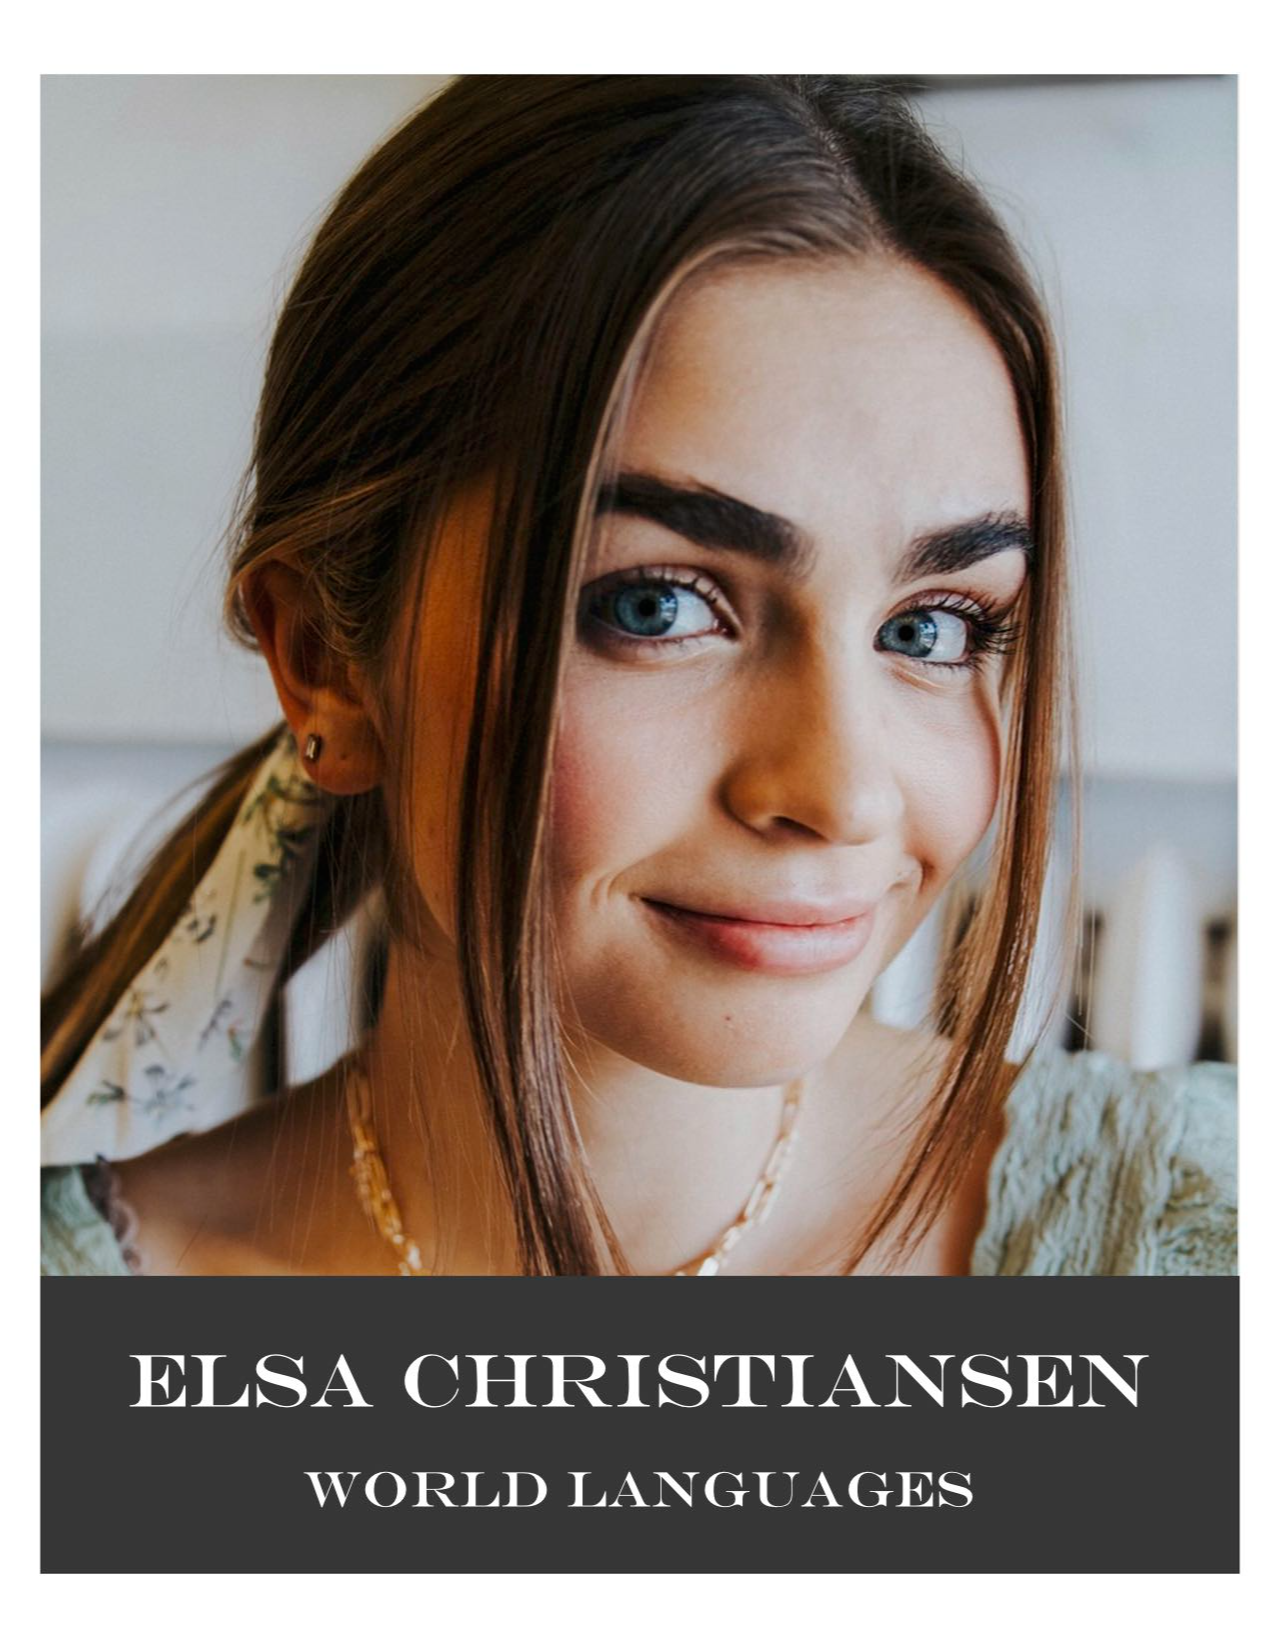 Elsa Christiansen